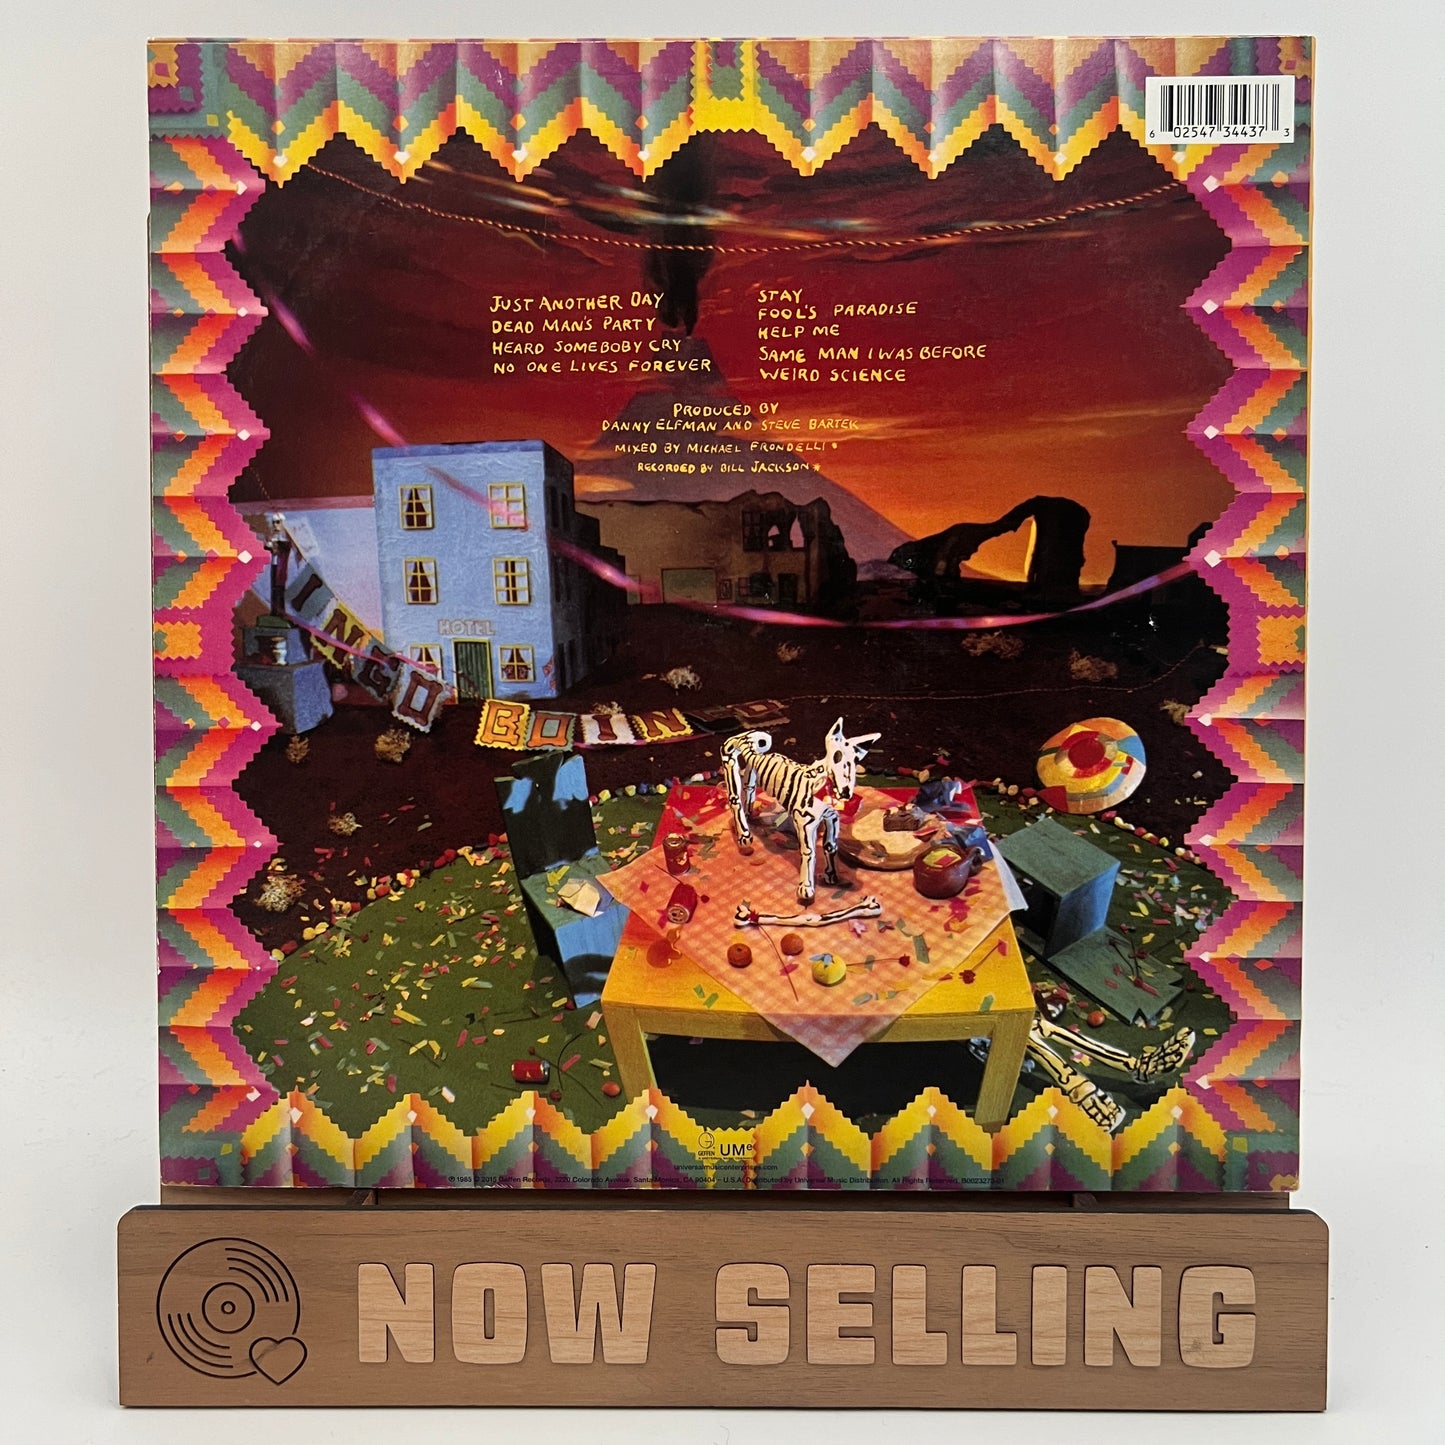 Oingo Boingo - Dead Man's Party Vinyl LP Red Reissue Danny Elfman